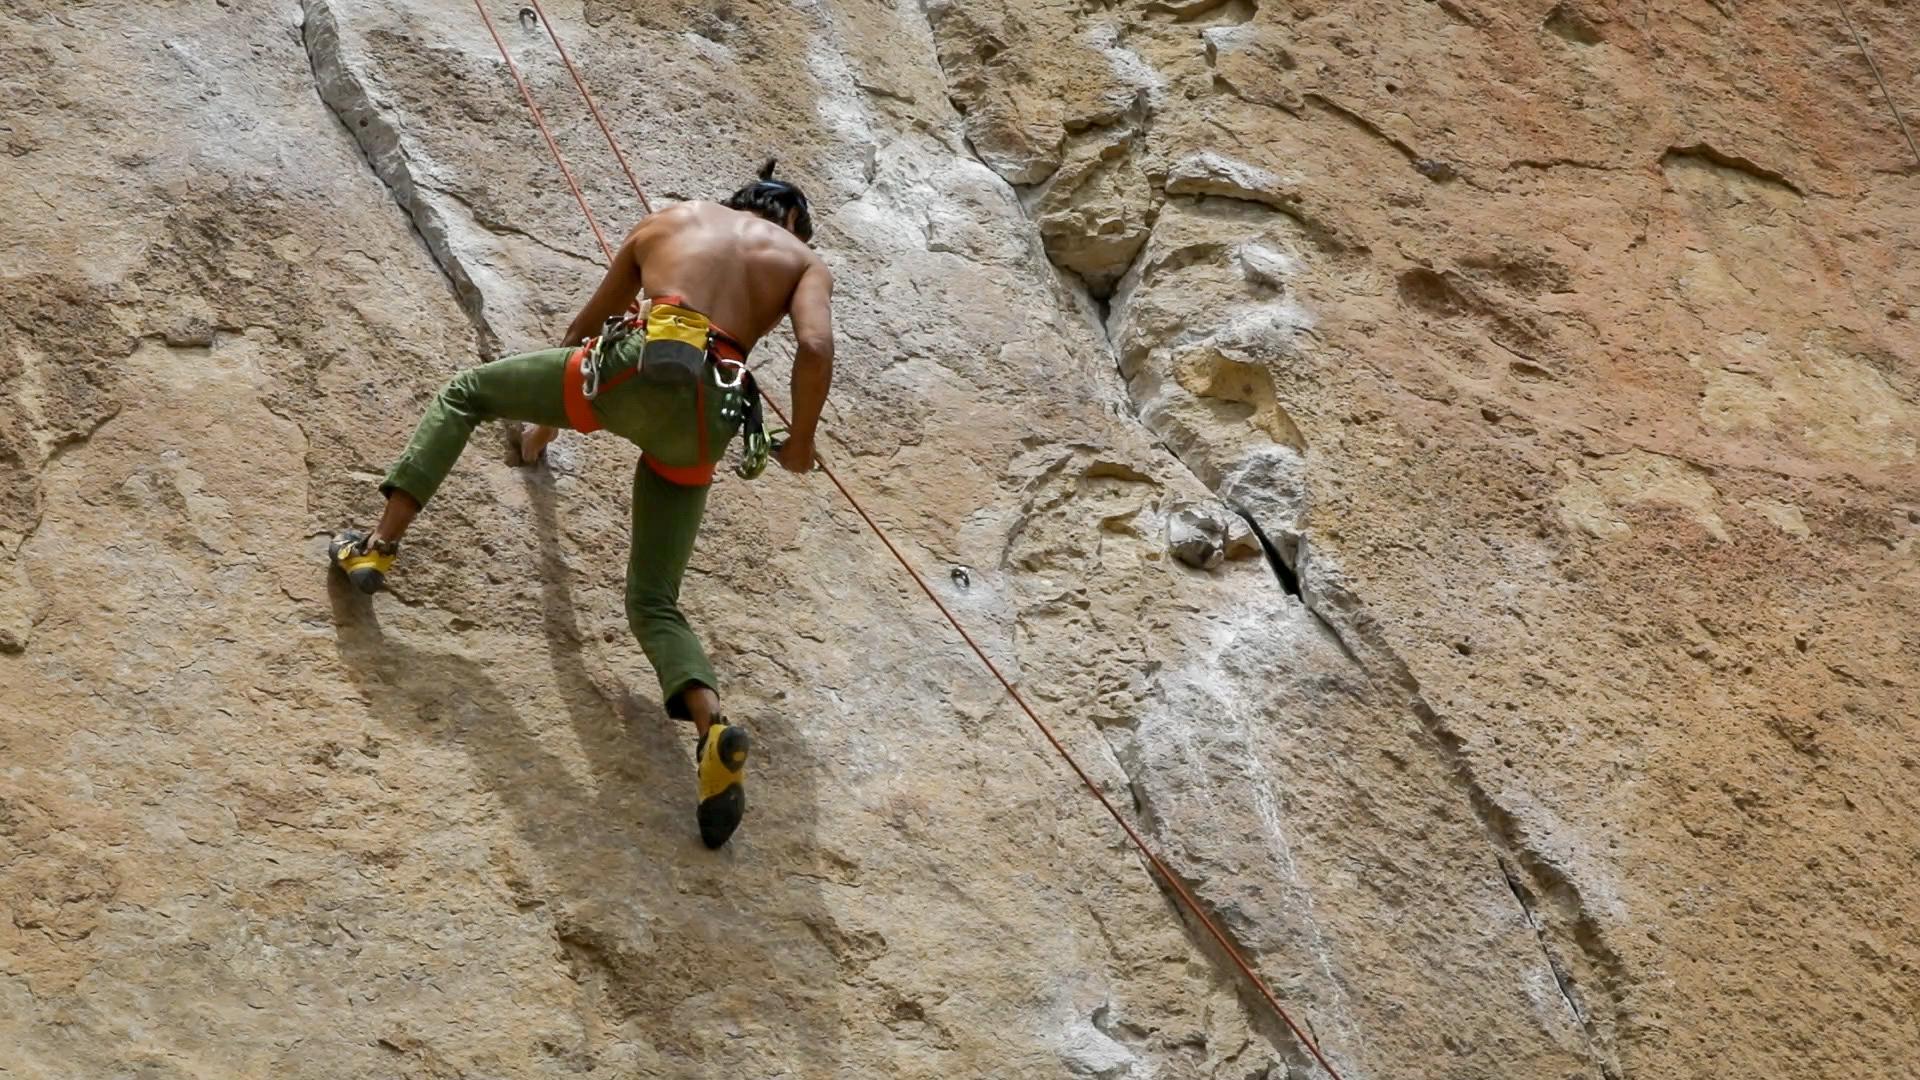 Wilderness agencies consider new policies for rock climbing gear